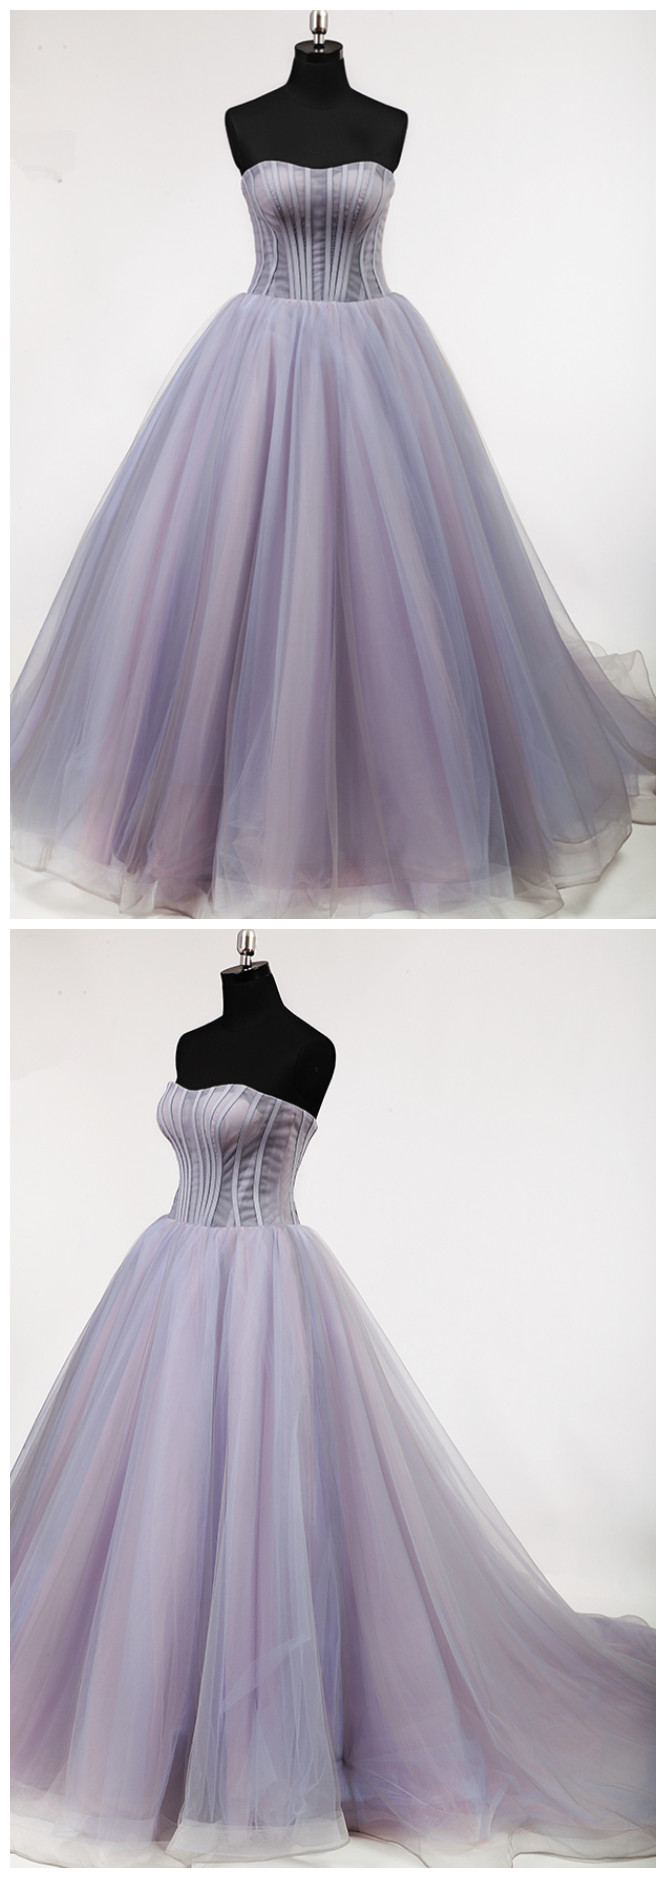 Puffy A Line Off Shoulder Pleat Prom Dress, Lace Up Back Court Train Prom Dresses,elegant Lady Lovely Light Purple Full Boning Bodice Prom Dress,